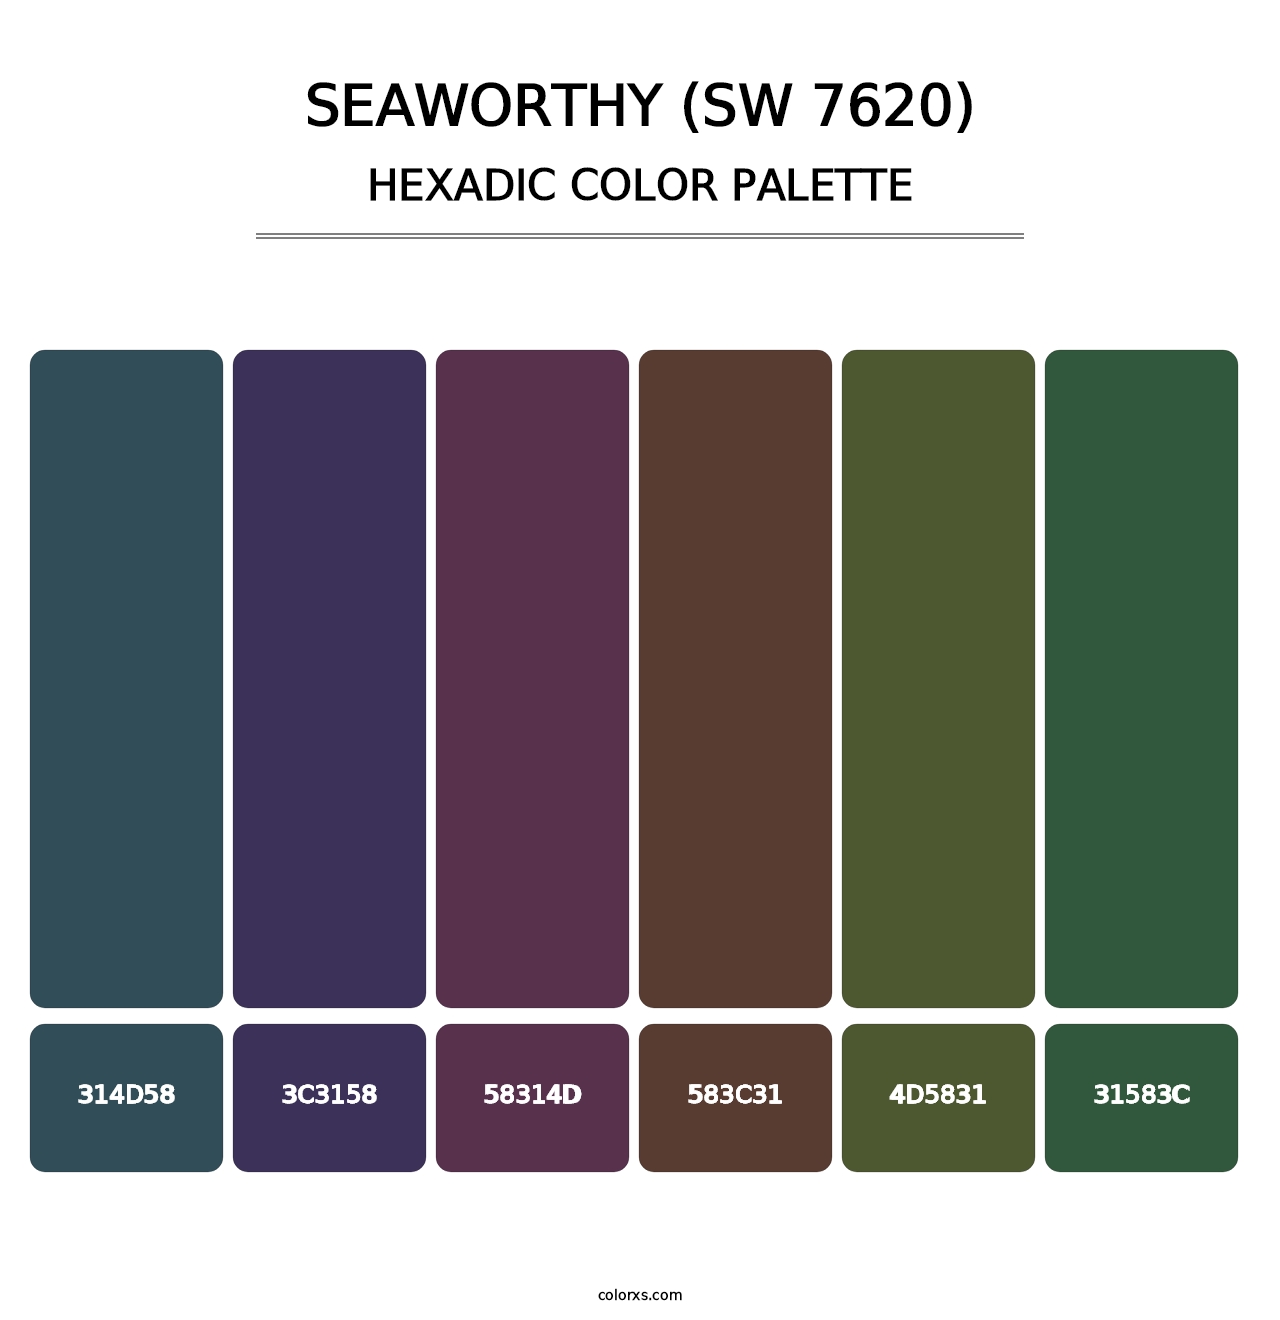 Seaworthy (SW 7620) - Hexadic Color Palette